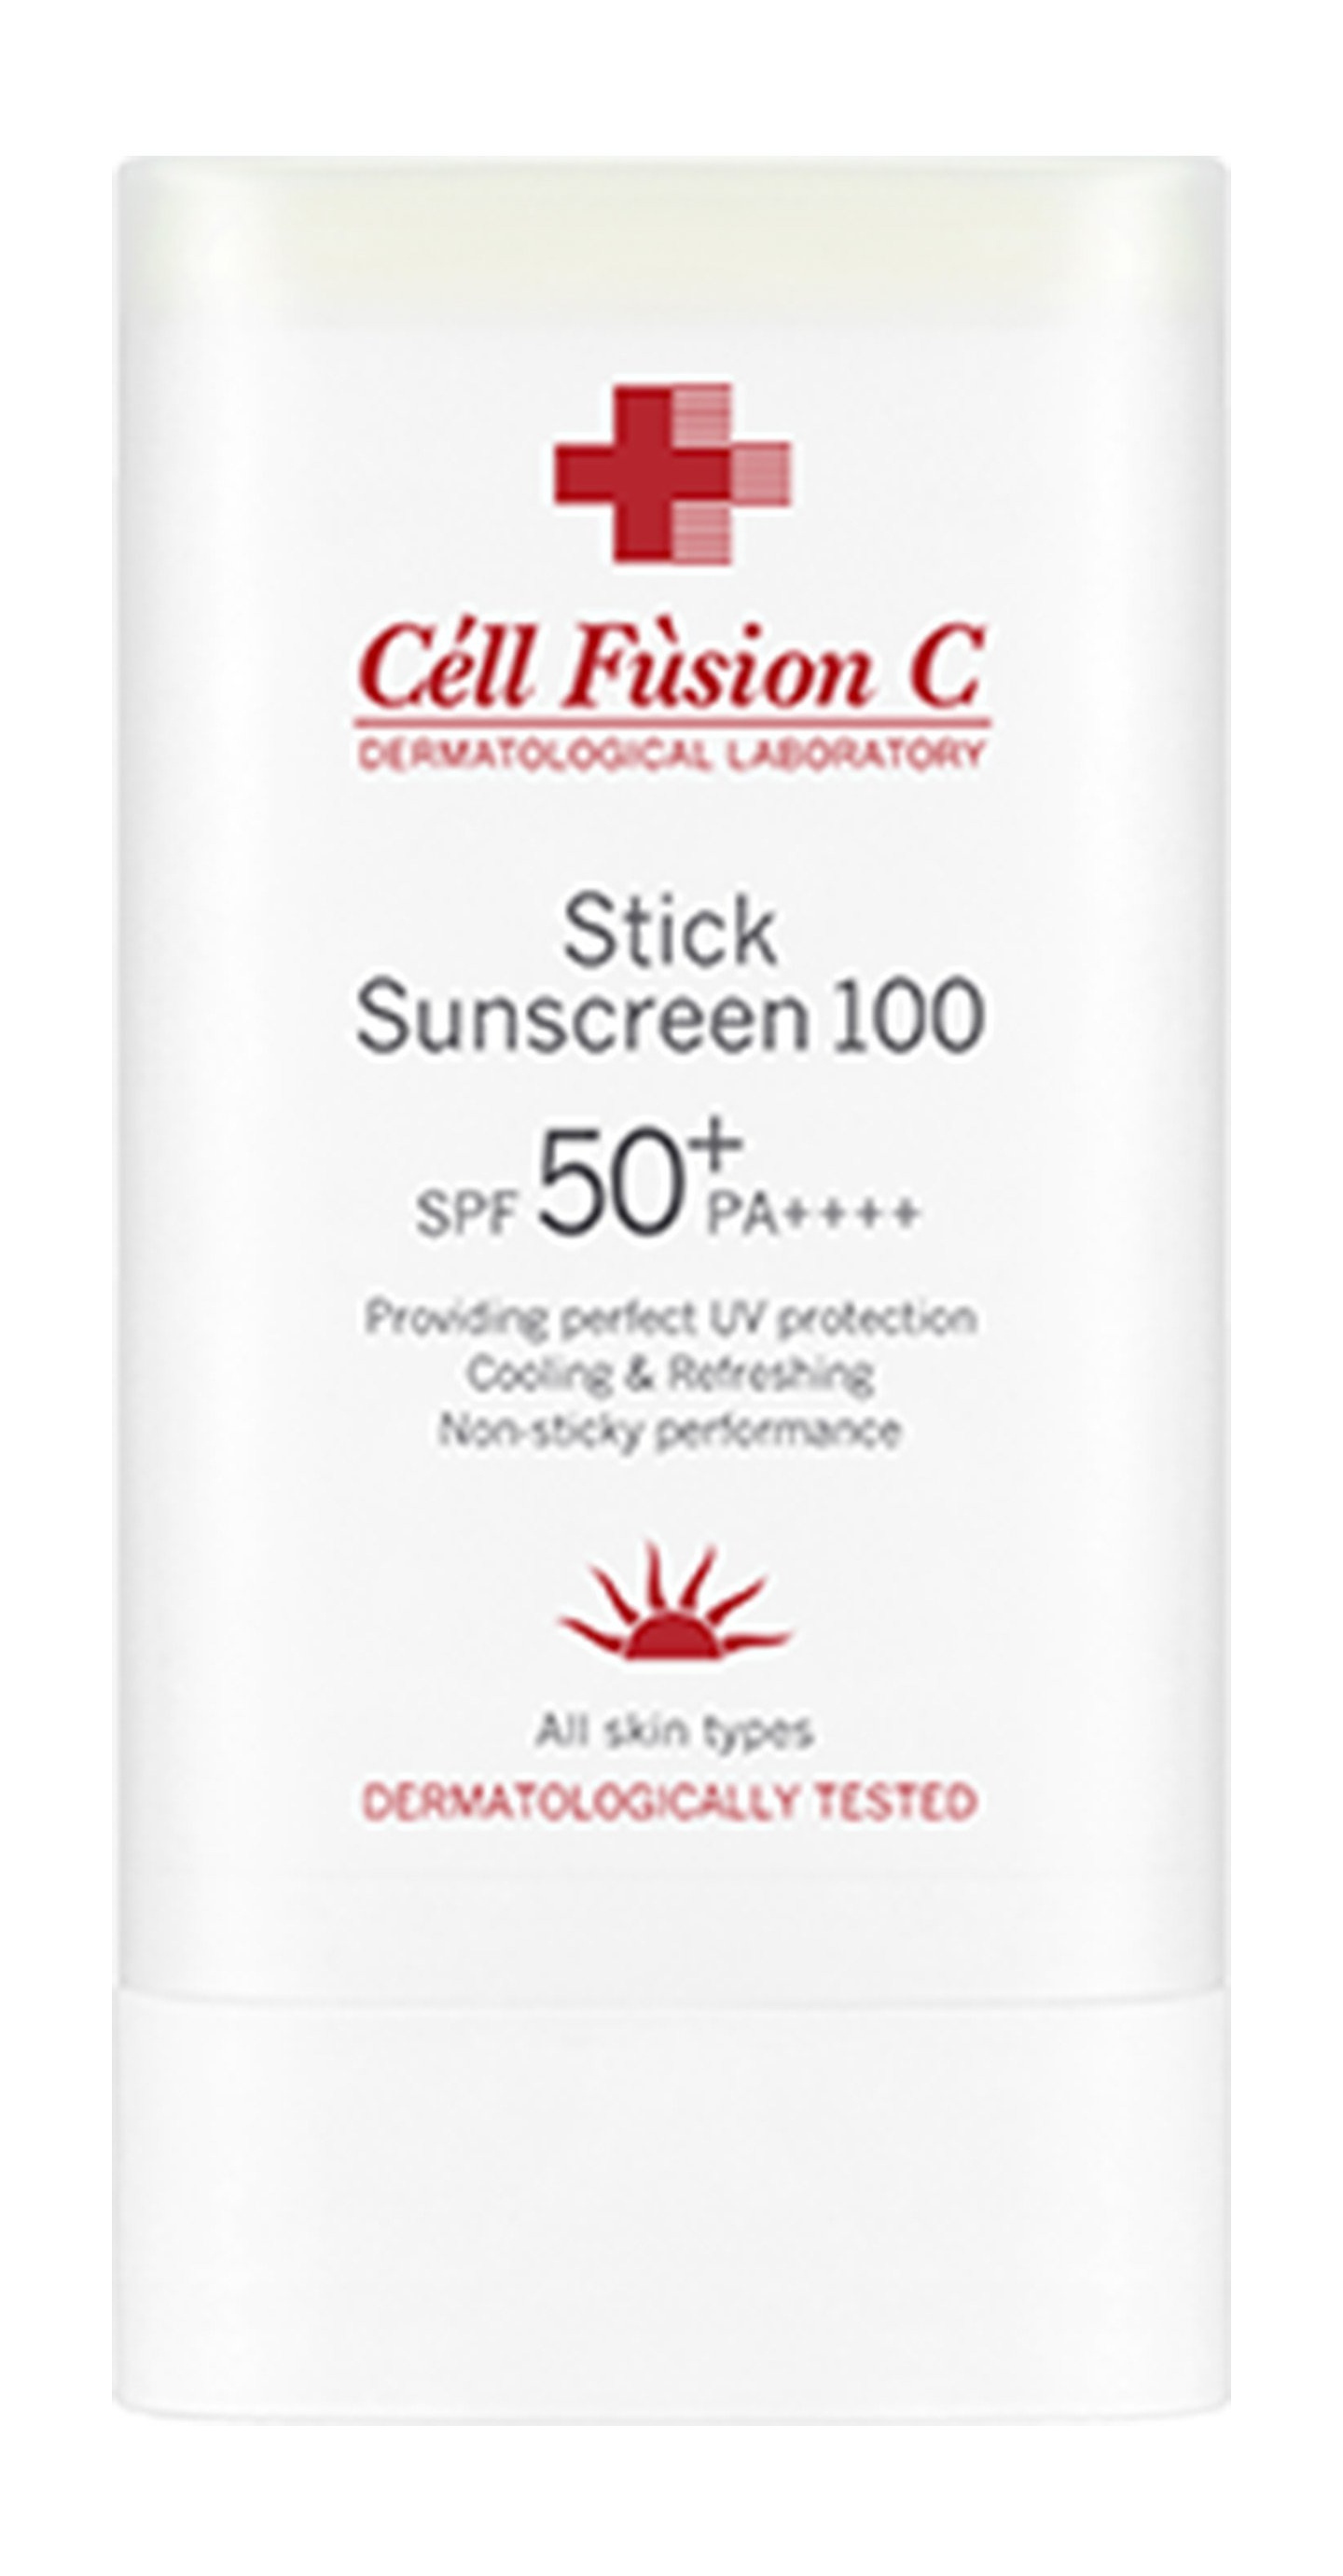 Cell Fusion C Stick Sunscreen 100 SPF 50+